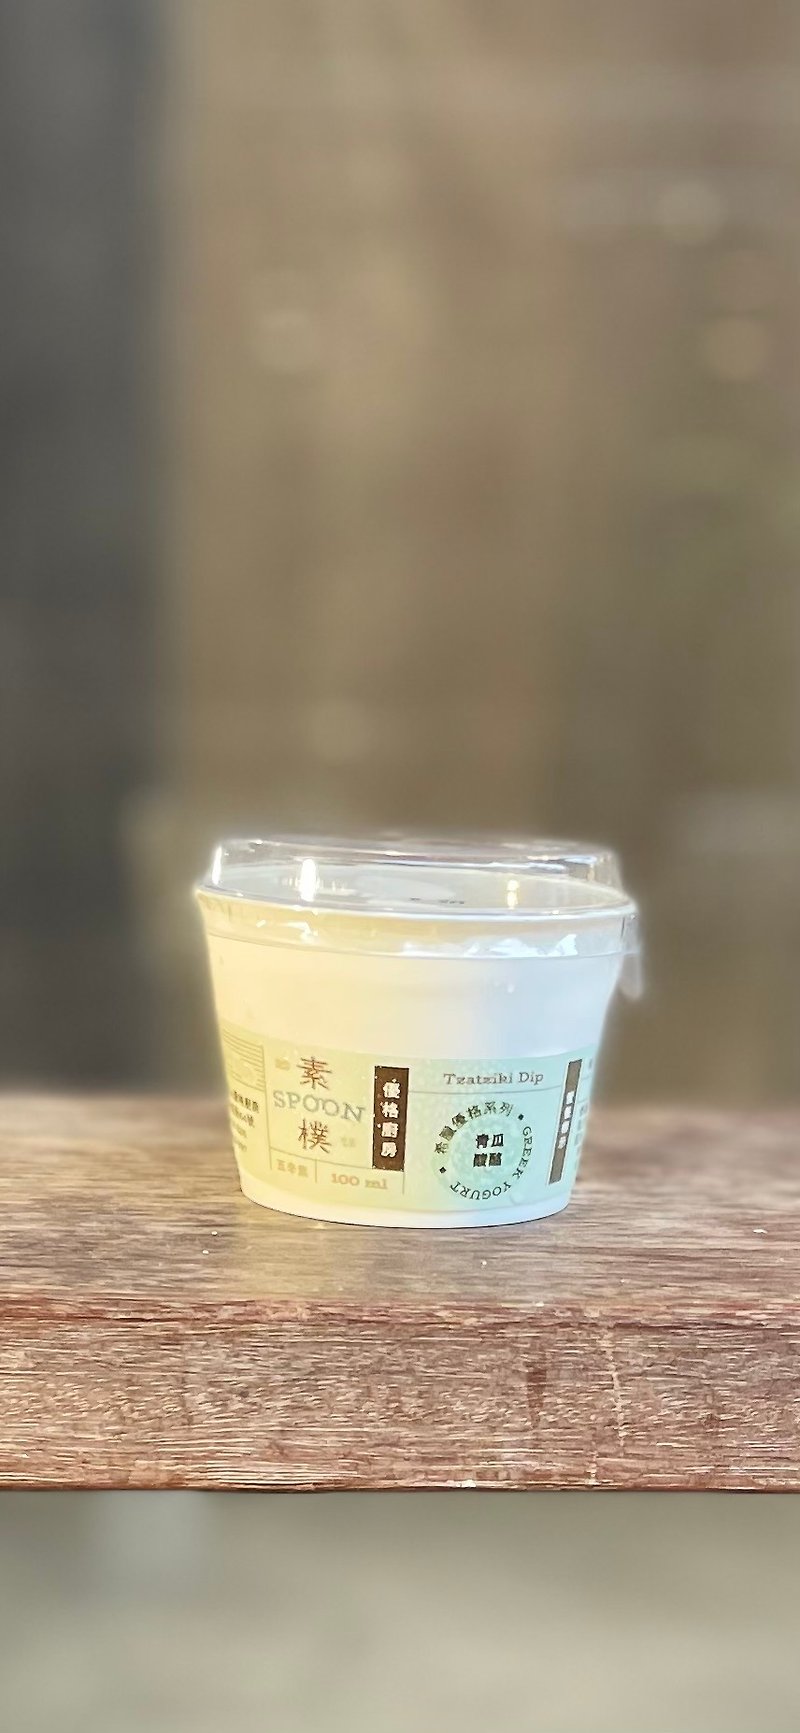 Production of Greek Yogurt 6-in Gift Box Ultra-low Temperature 65°C Sterilized Fresh Milk - Yogurt - Other Materials 